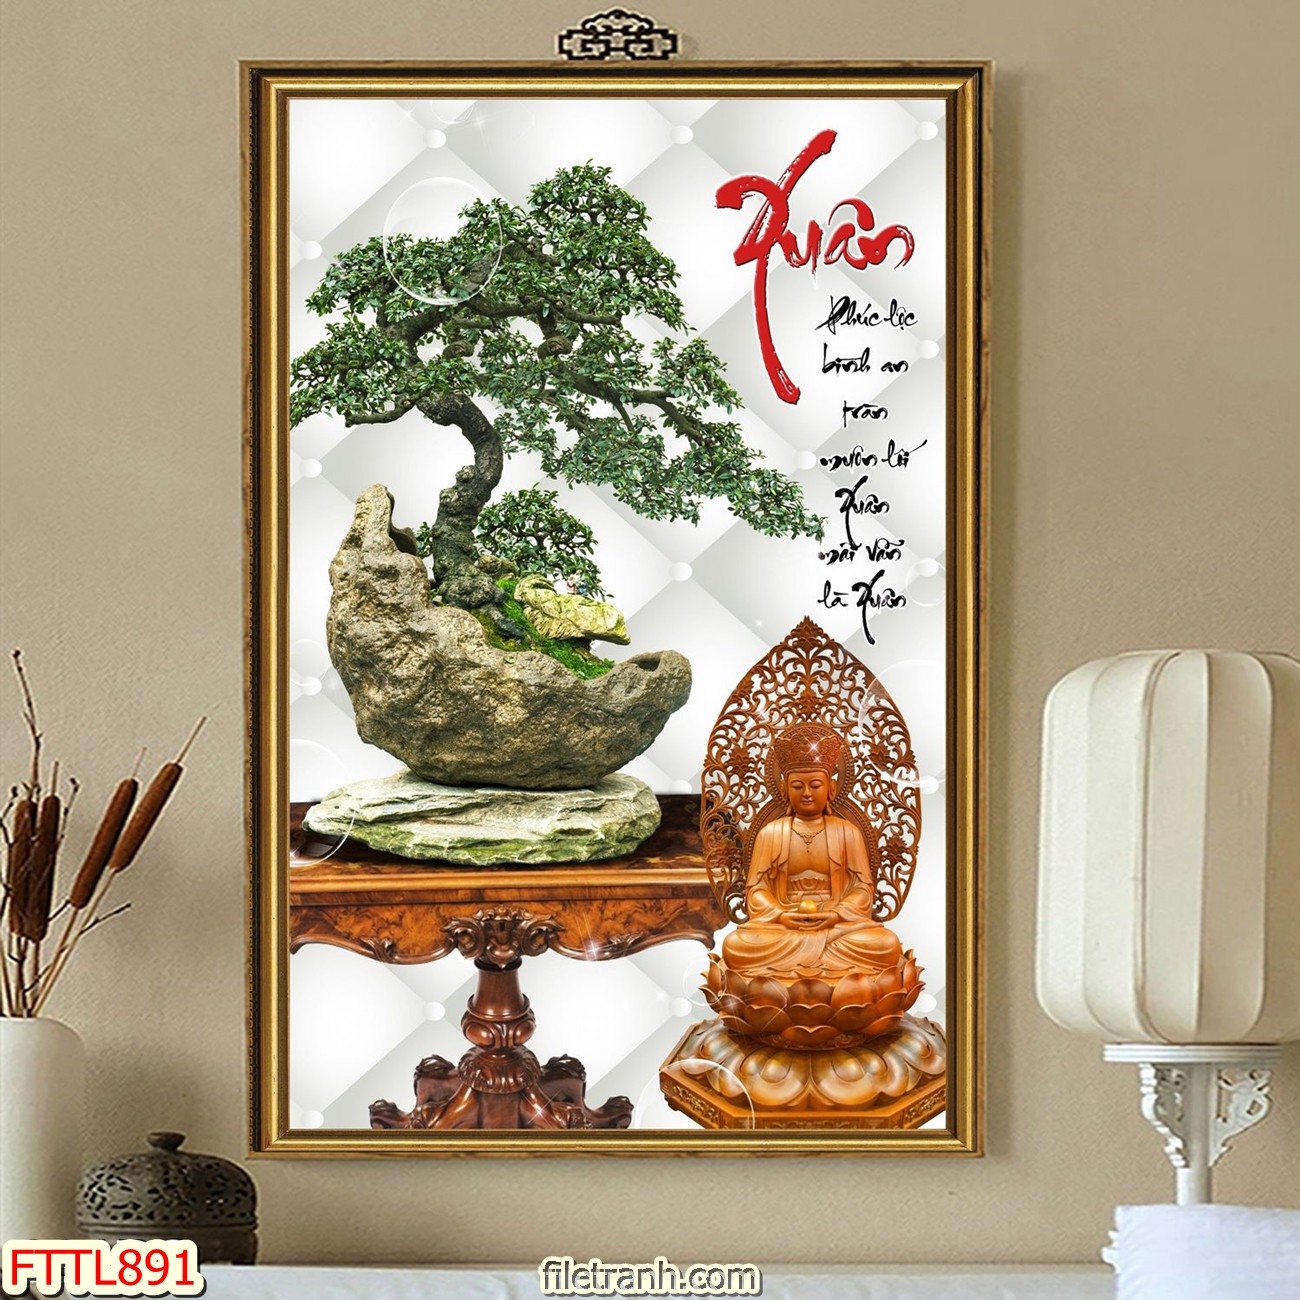 http://filetranh.com/file-tranh-chau-mai-bonsai/file-tranh-chau-mai-bonsai-fttl891.html